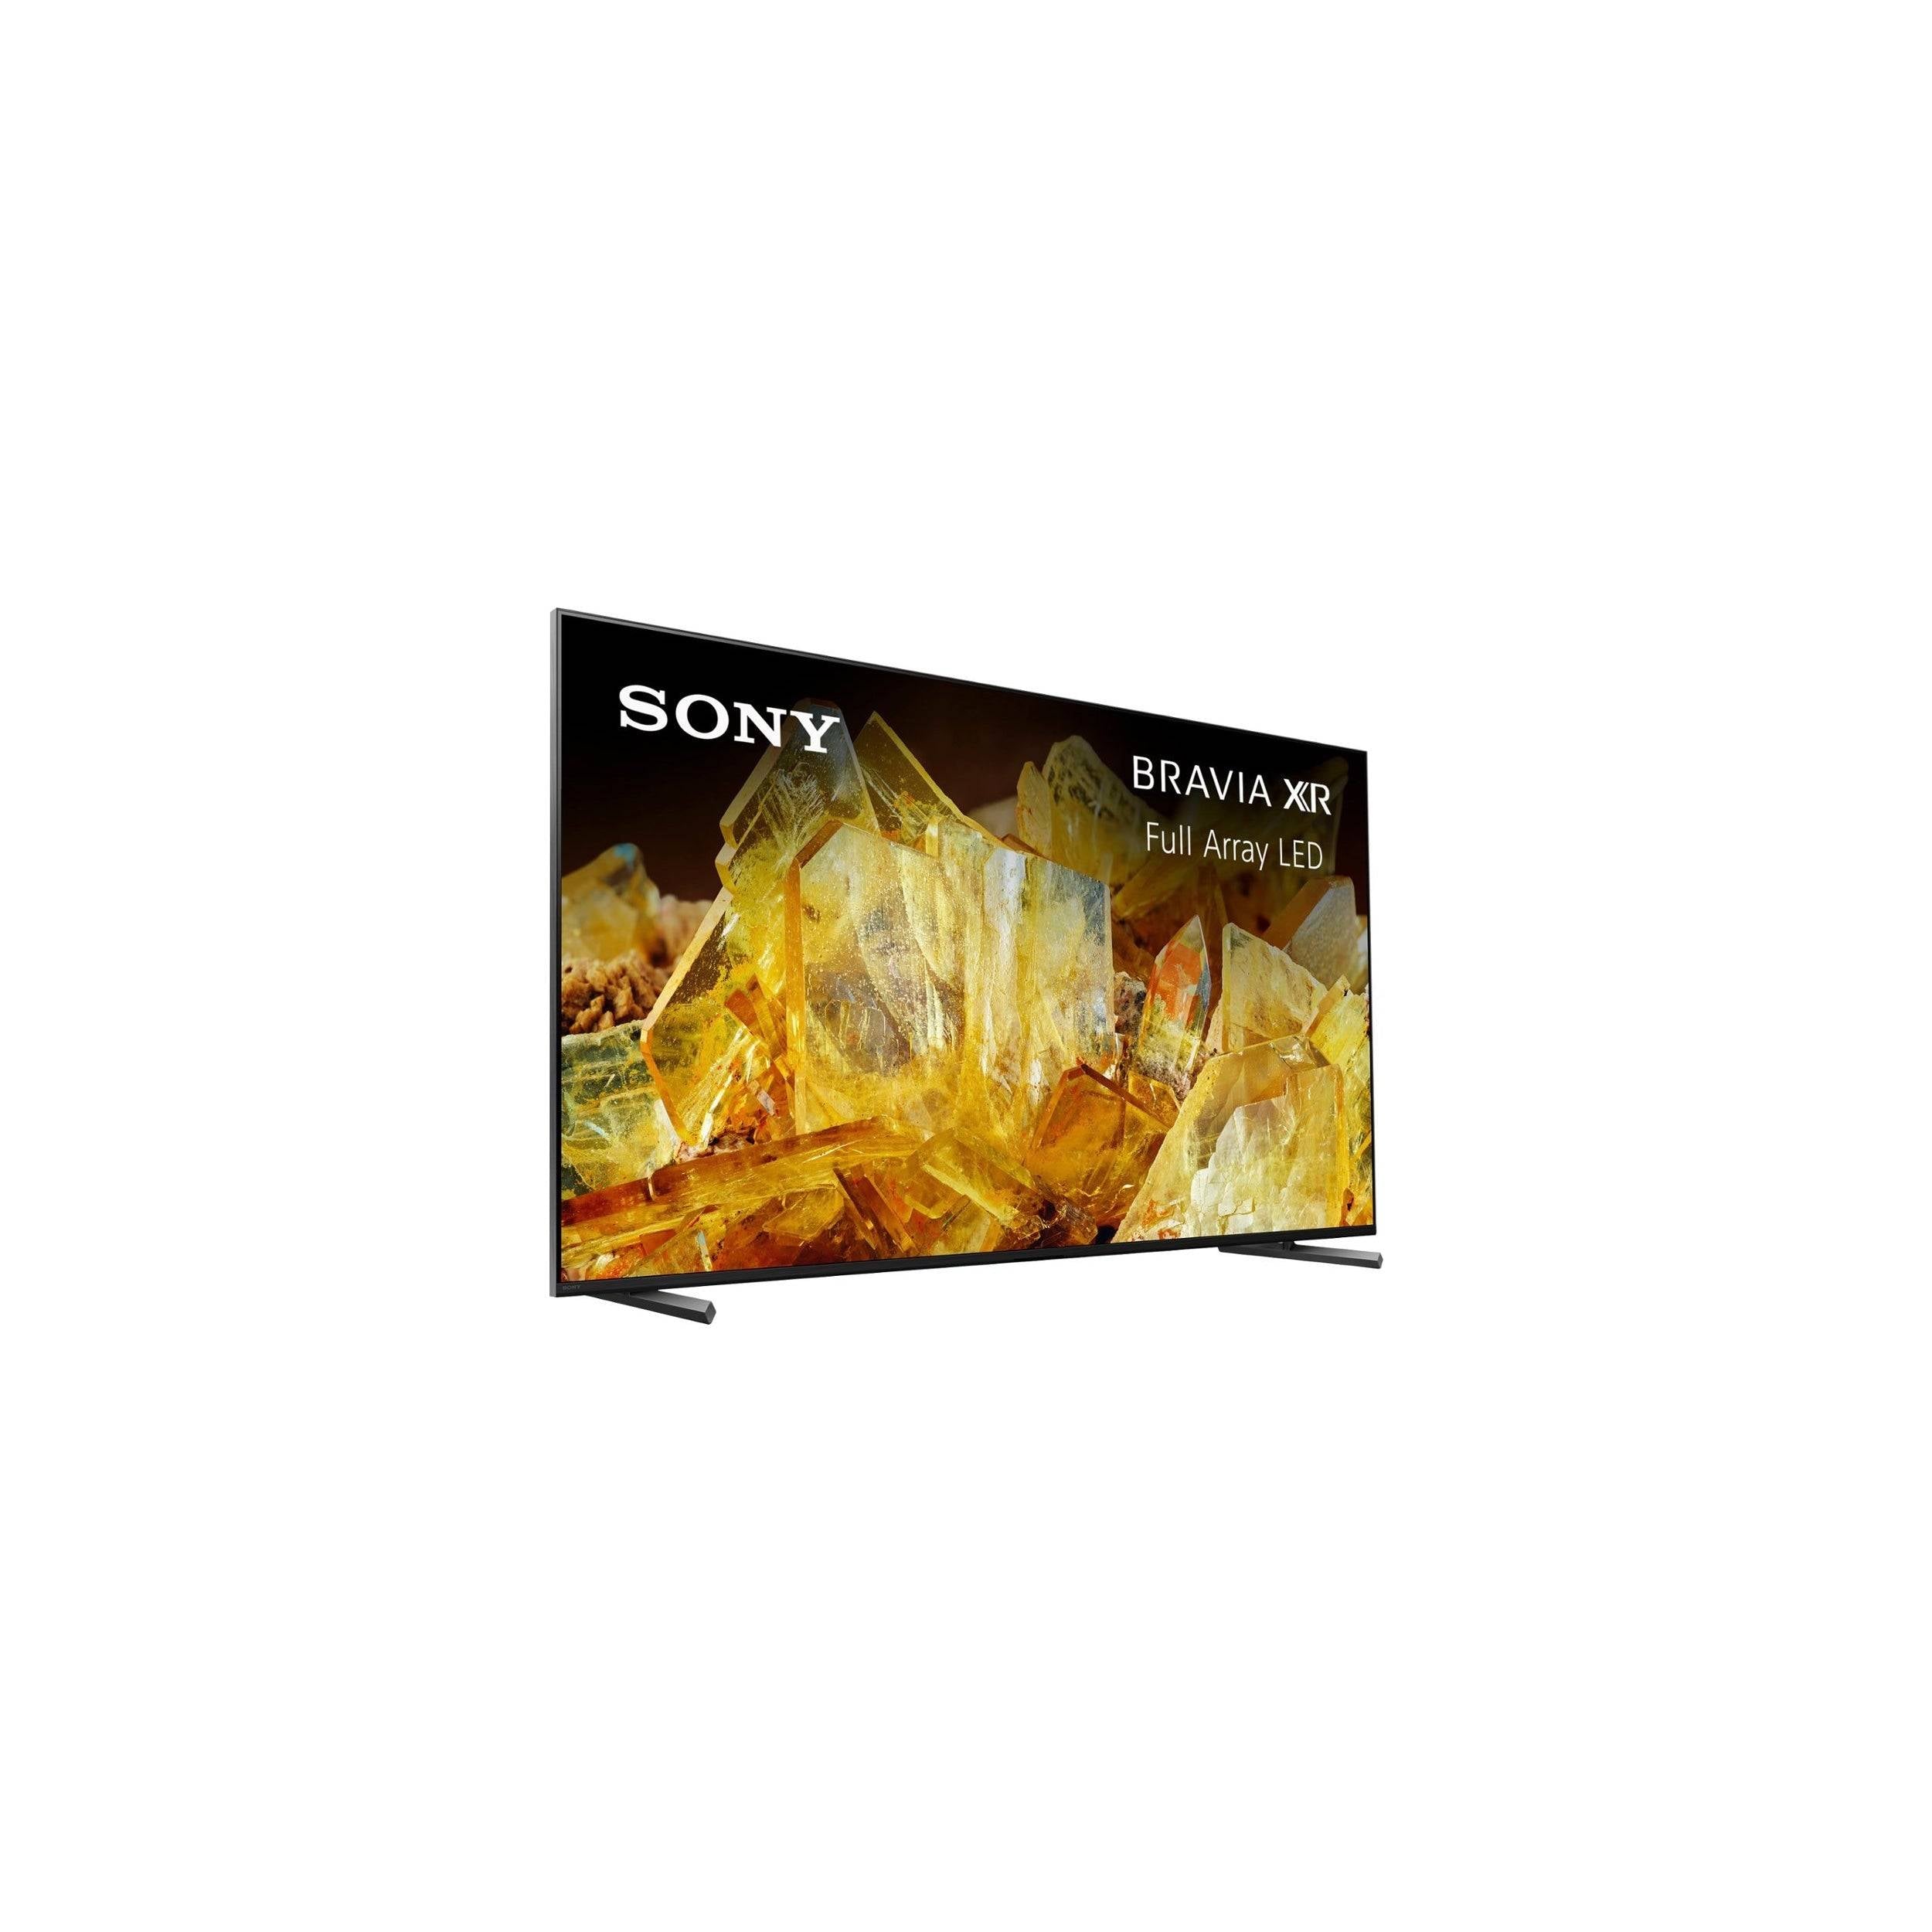 Sony BRAVIA XR X90L 4K HDR Smart LED TV